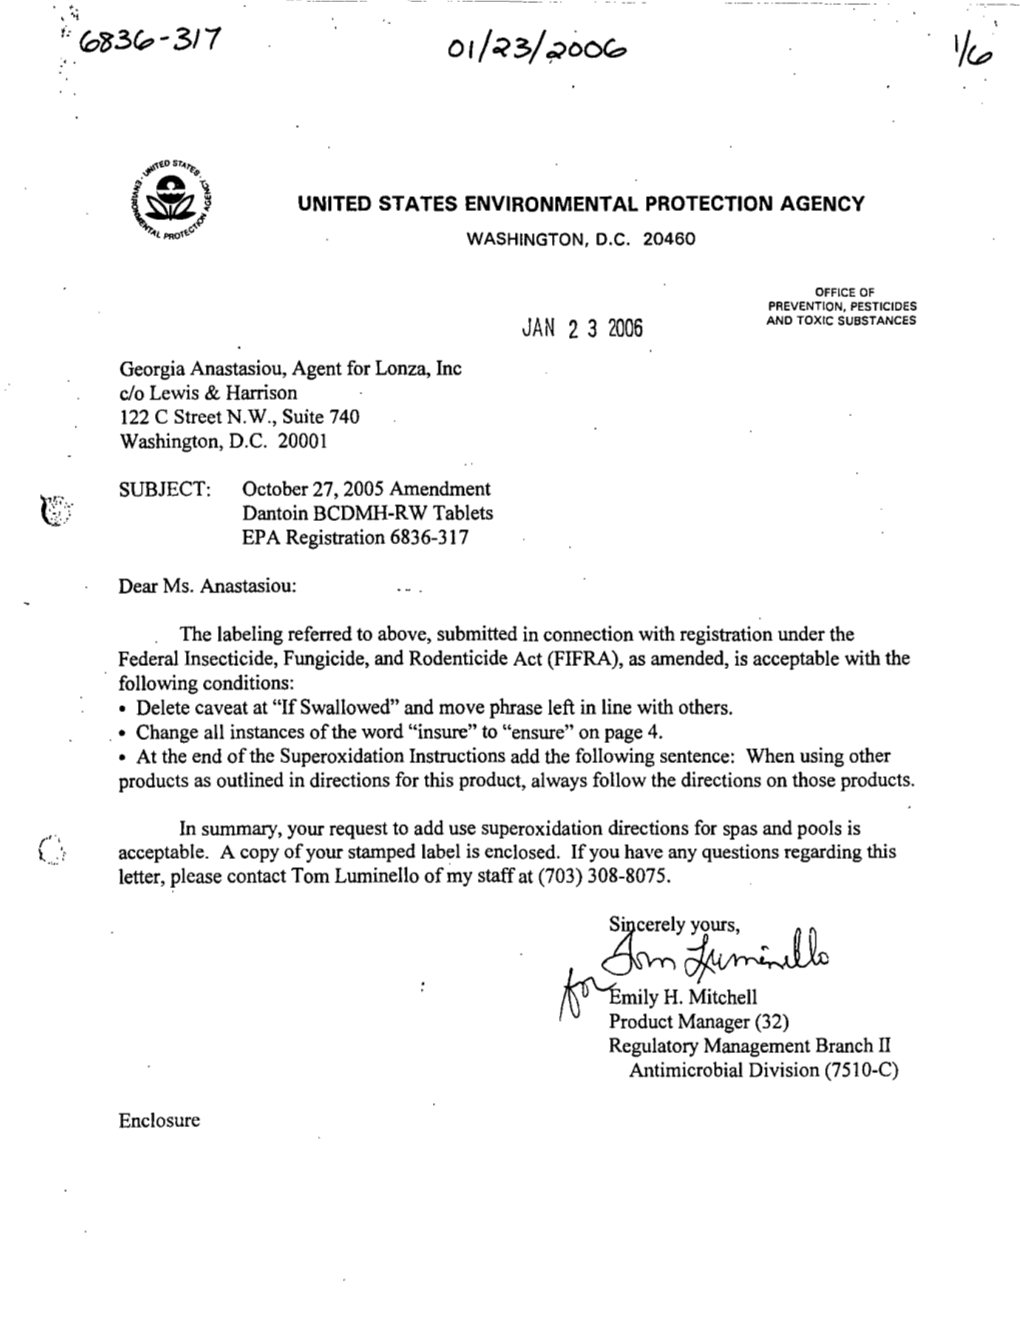 U.S. EPA, Pesticide Product Label, DANTOIN BCDMH RW TABLETS